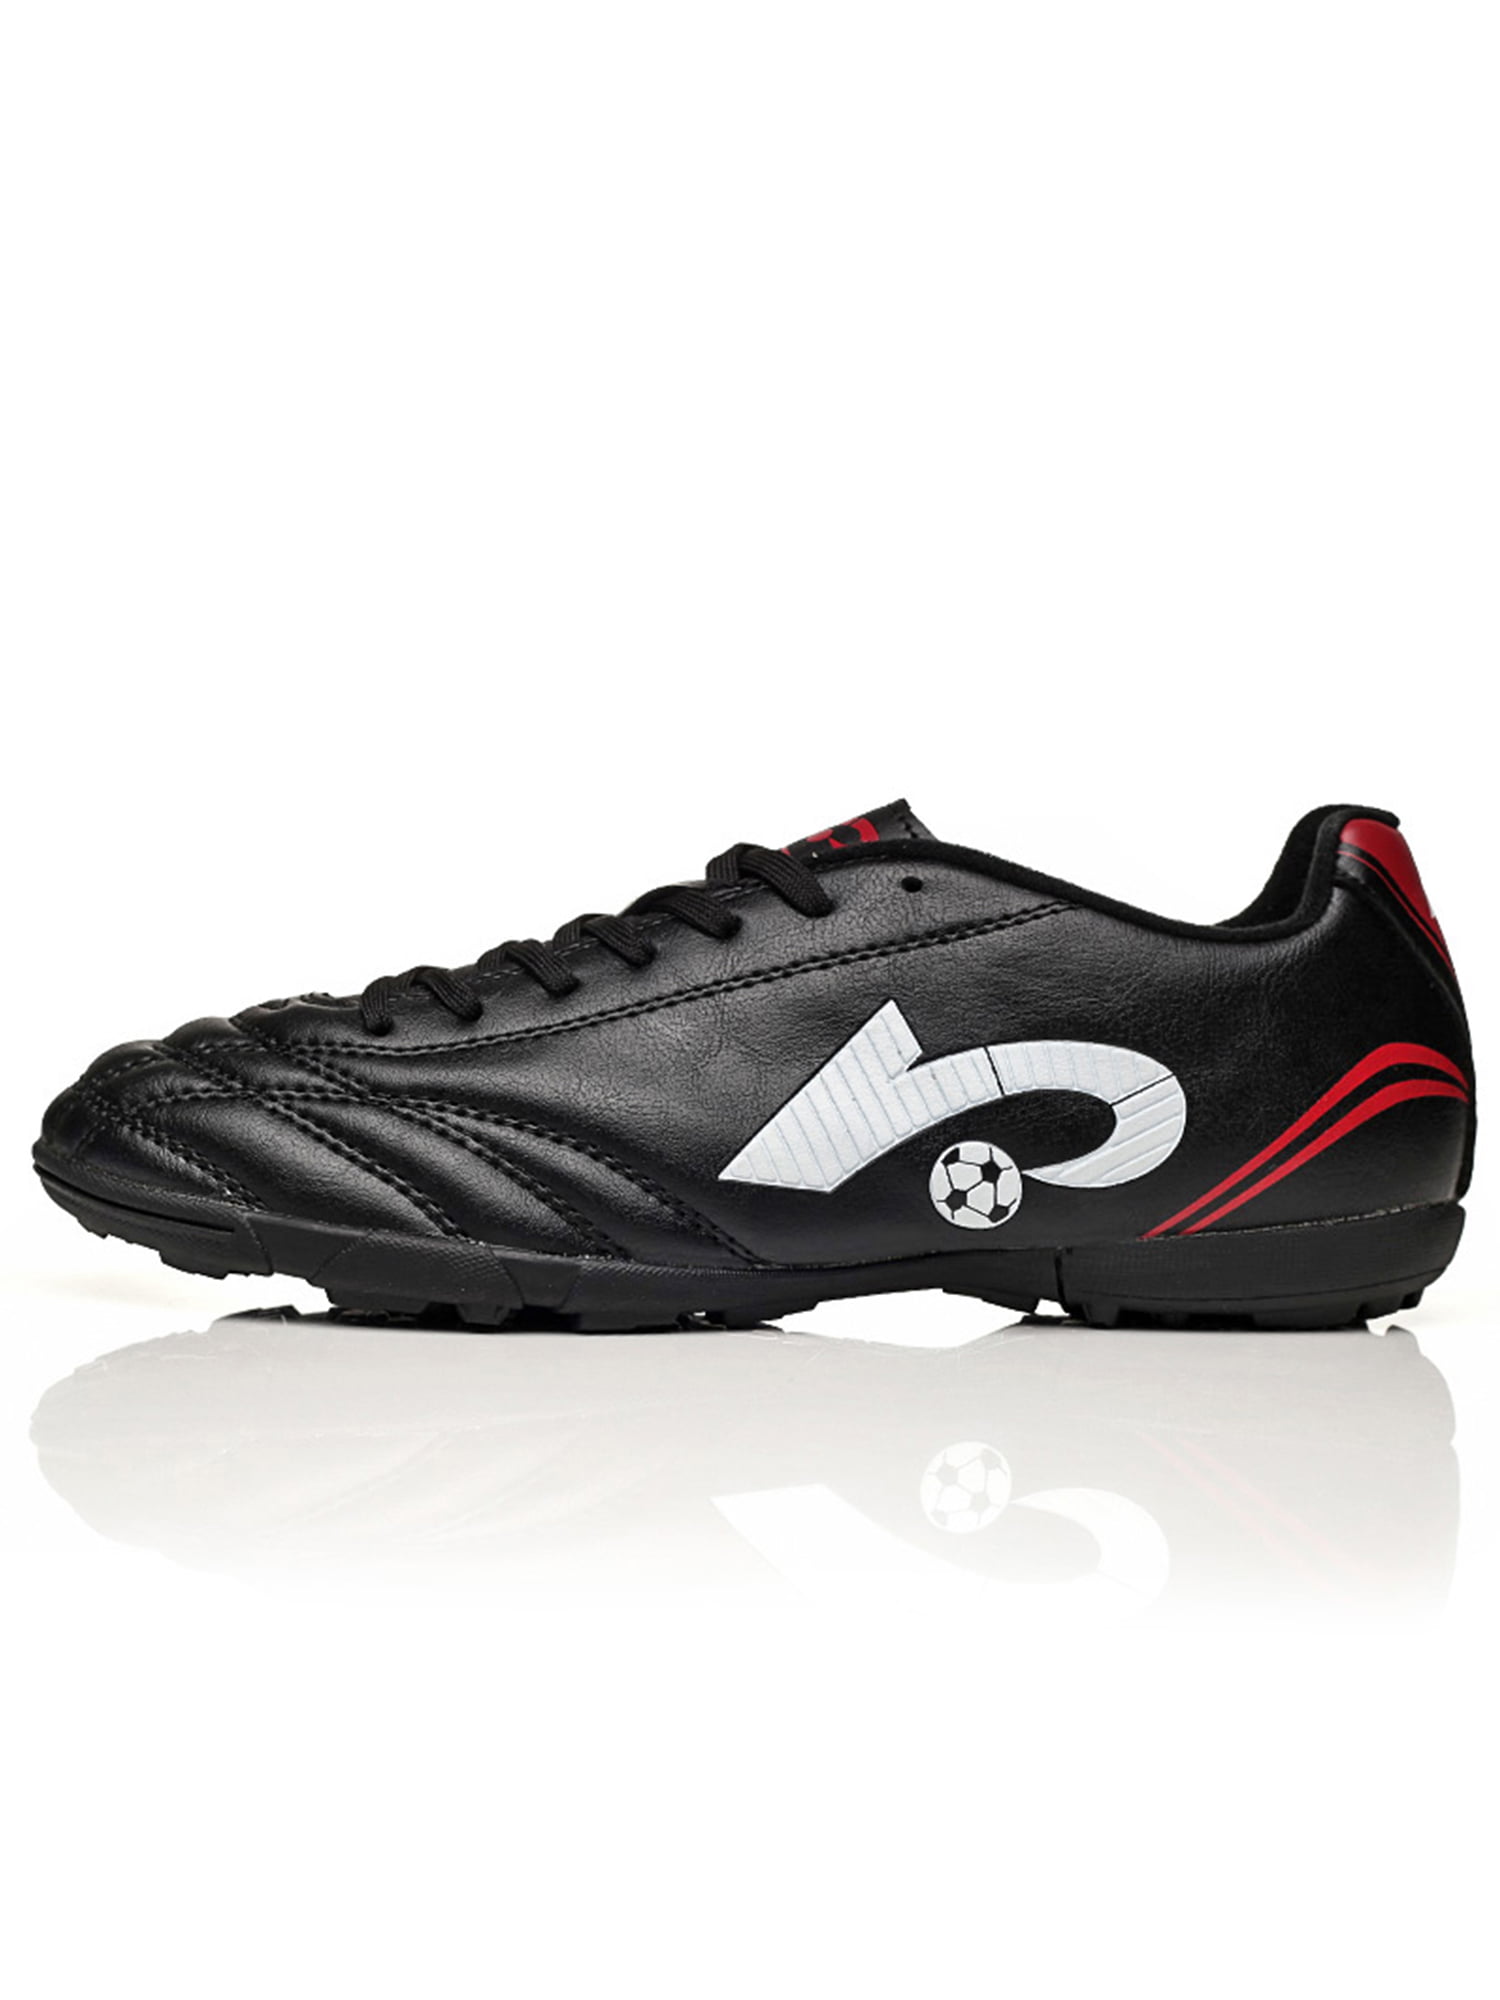 YING LAN Running Shoes for Men Athletic Tennis Sneakers Non-Slip Sports Sneakers Comfortable Walking Shoe